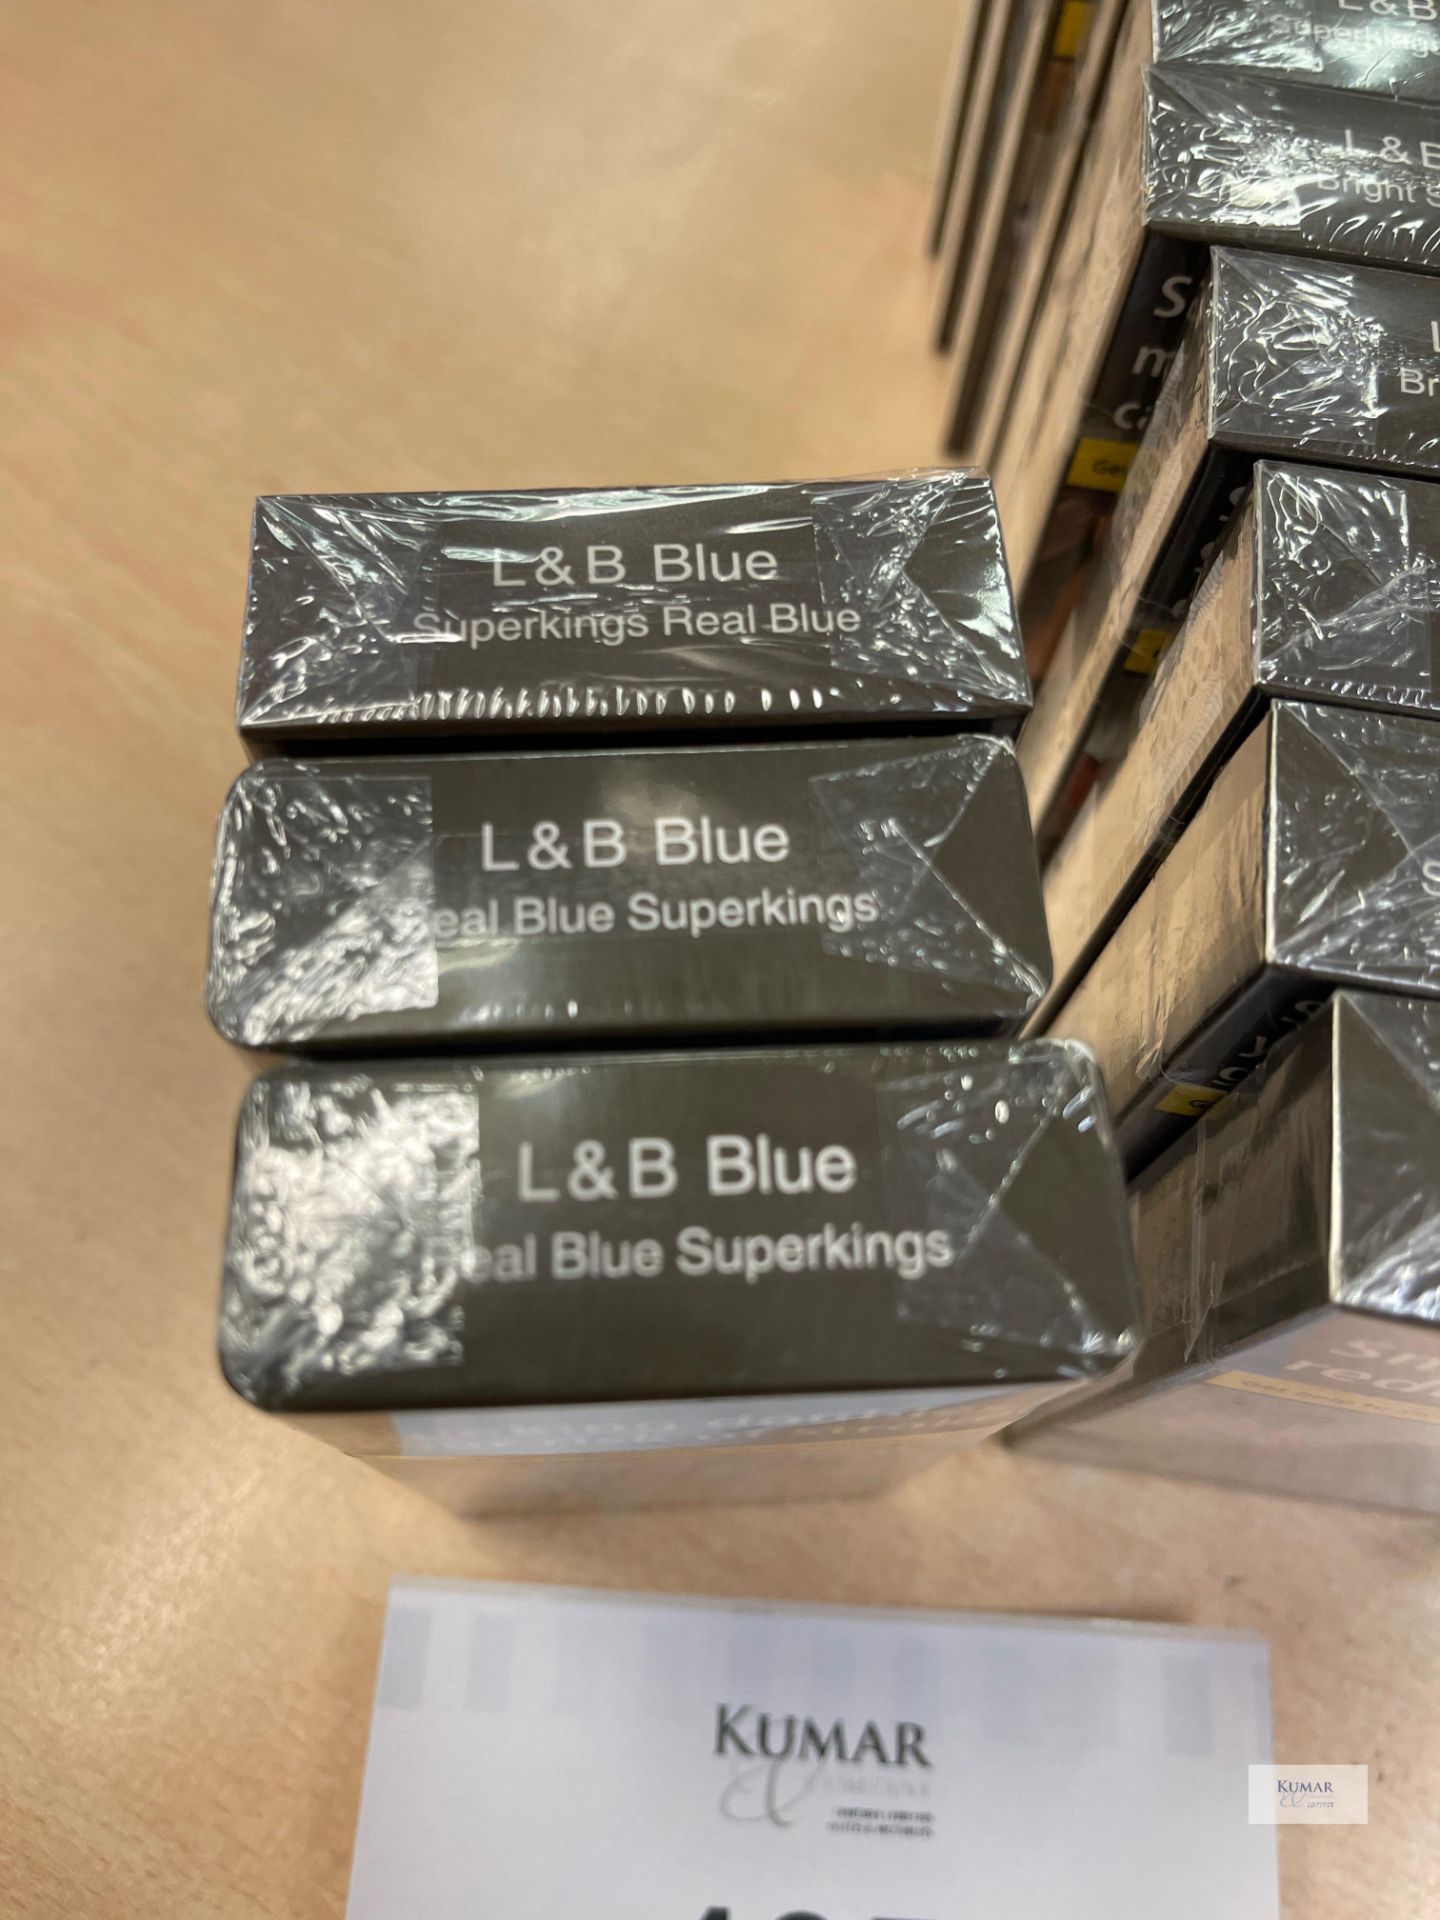 3 Packs: L&B Real Blue Superkings 20 Cigarettes, 10 Packs: L&B Blue Superkings Bright Blue 20 - Image 4 of 11